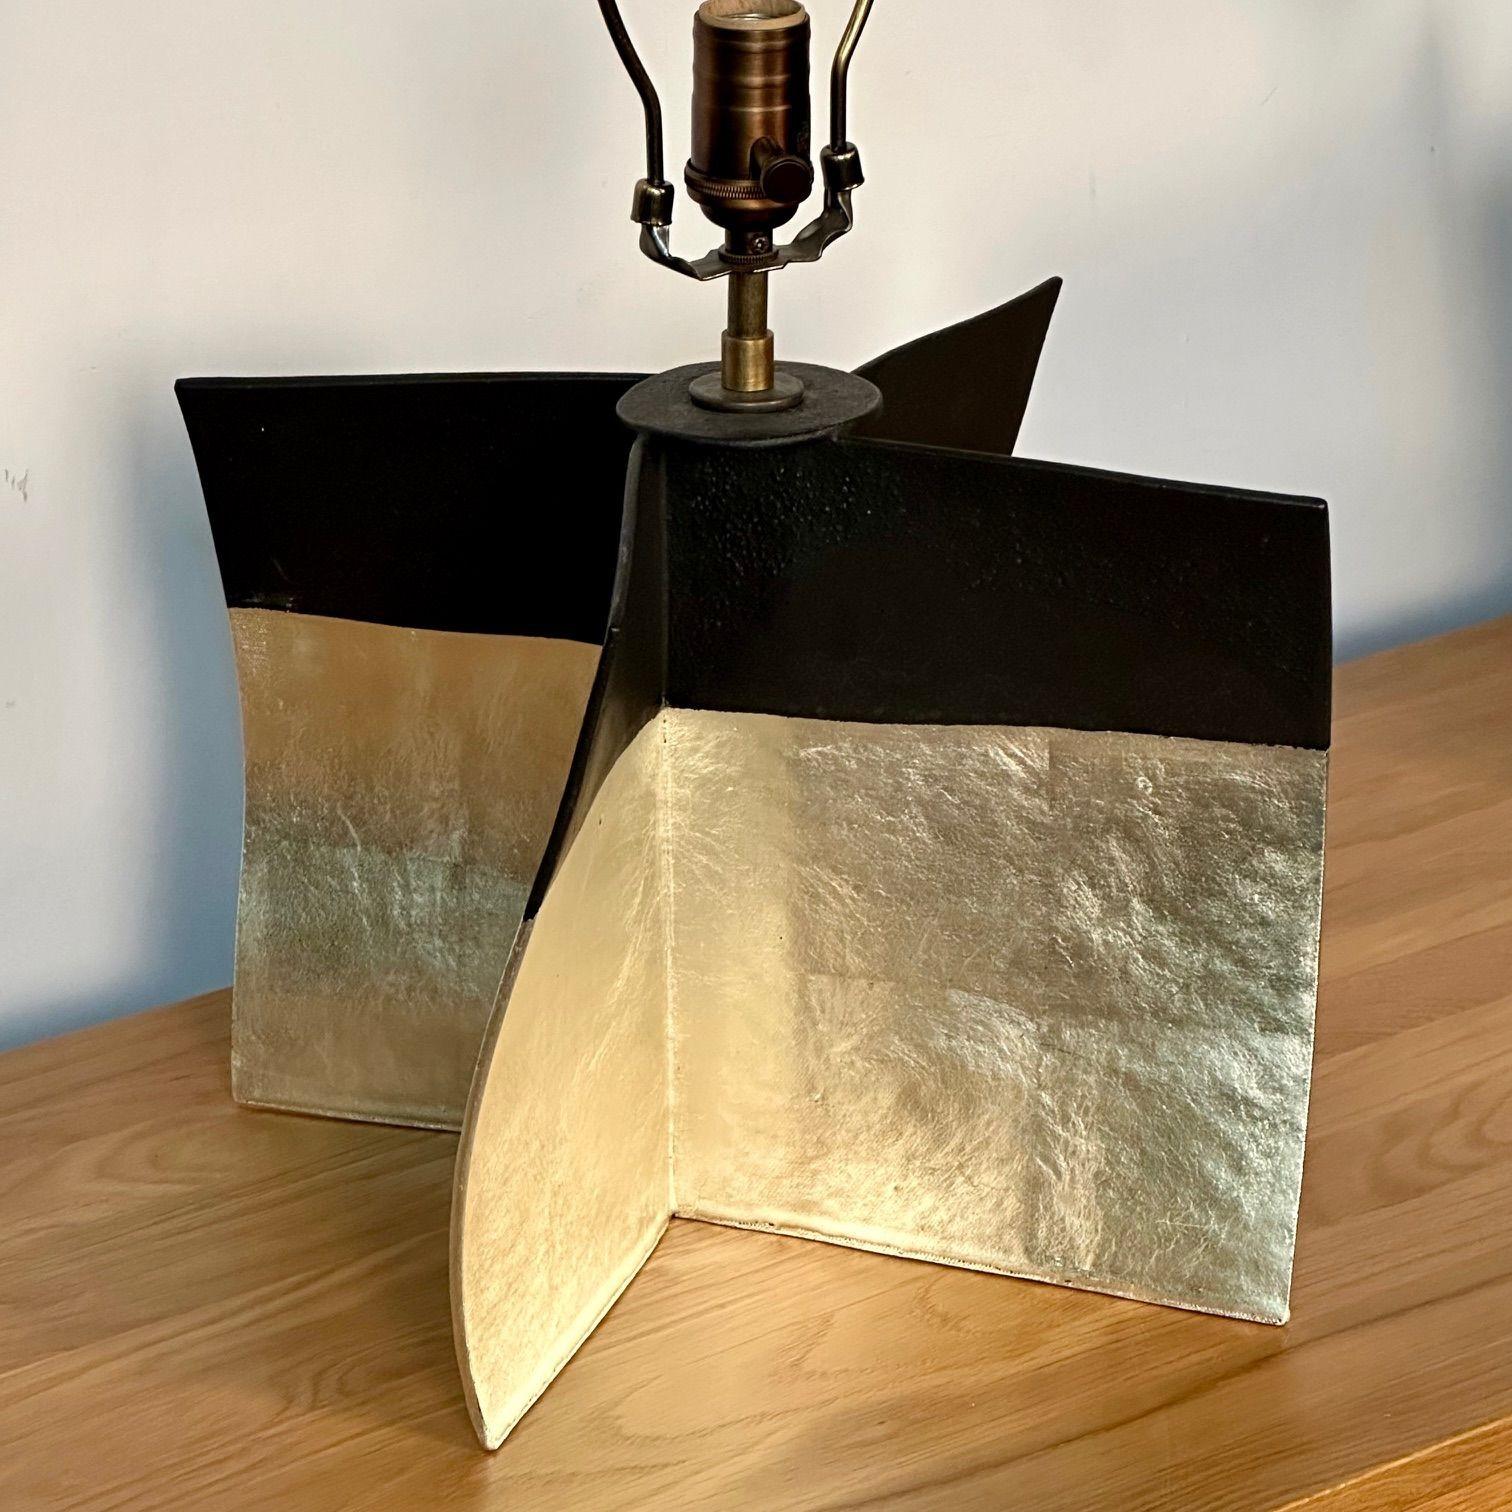 Dumais Made, Contemporary, Ceramic Croisillon Table Lamps, Gold Glaze, 2021 For Sale 2